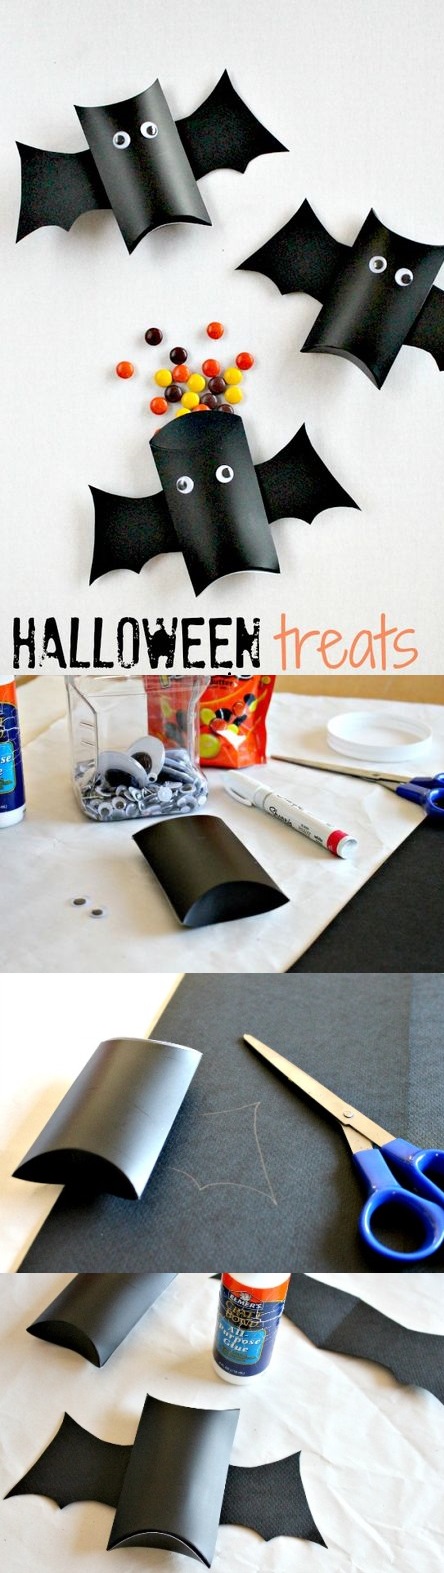 Easy DIY Halloween Treats For Kids